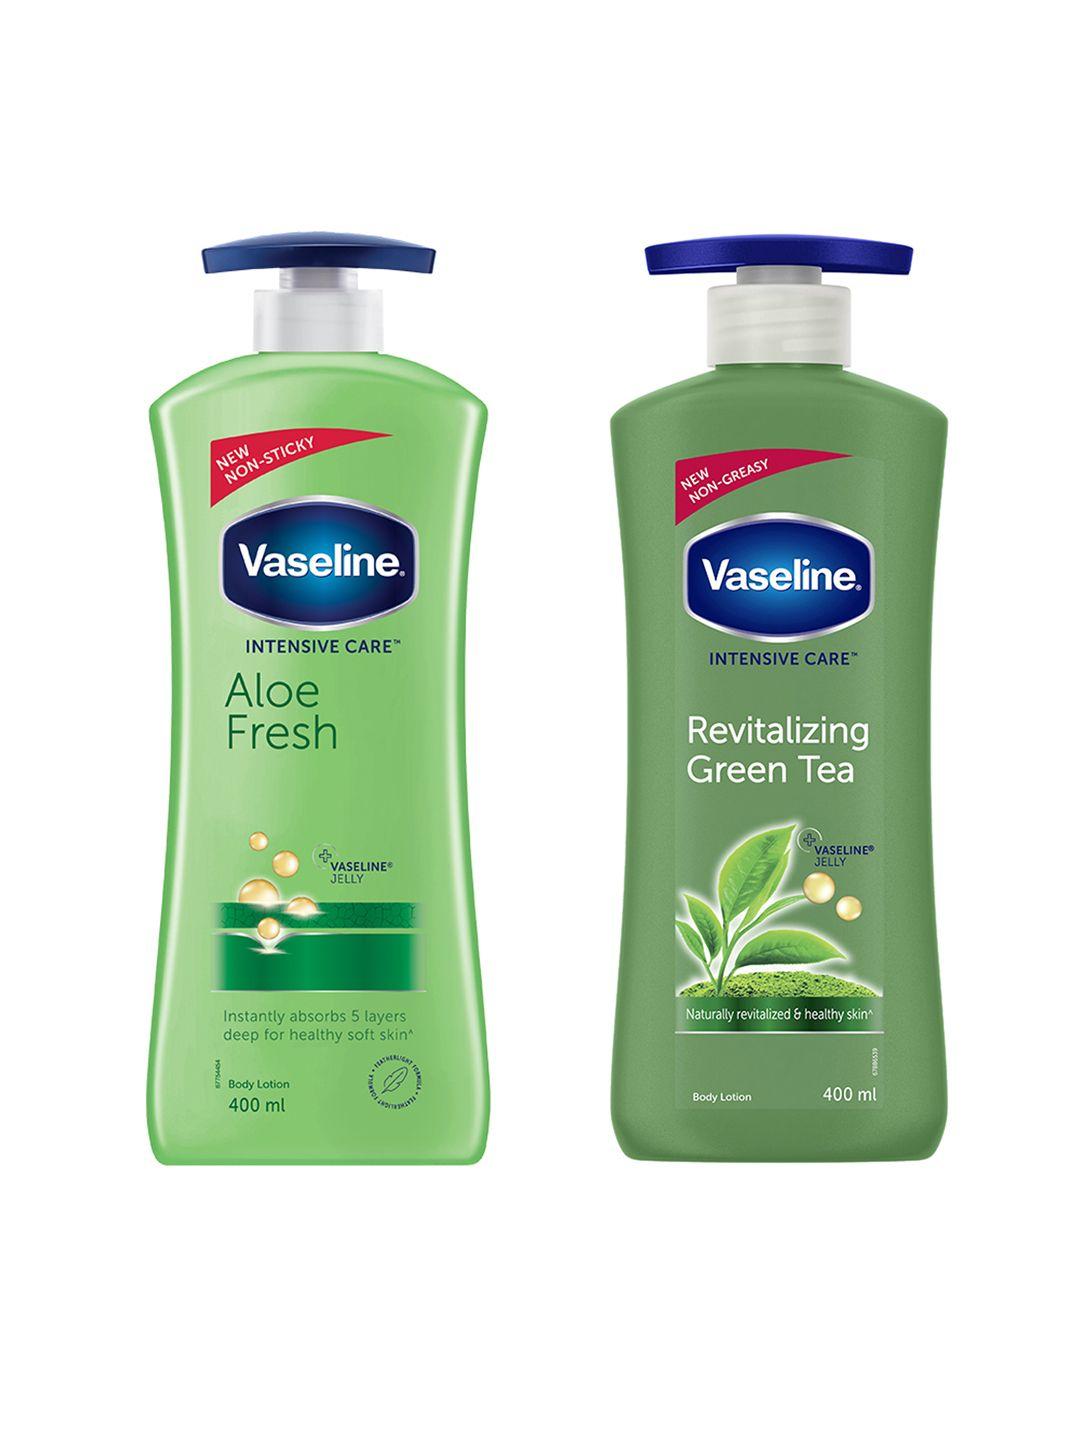 vaseline set of intensive care aloe fresh & revitalizing green tea body lotions